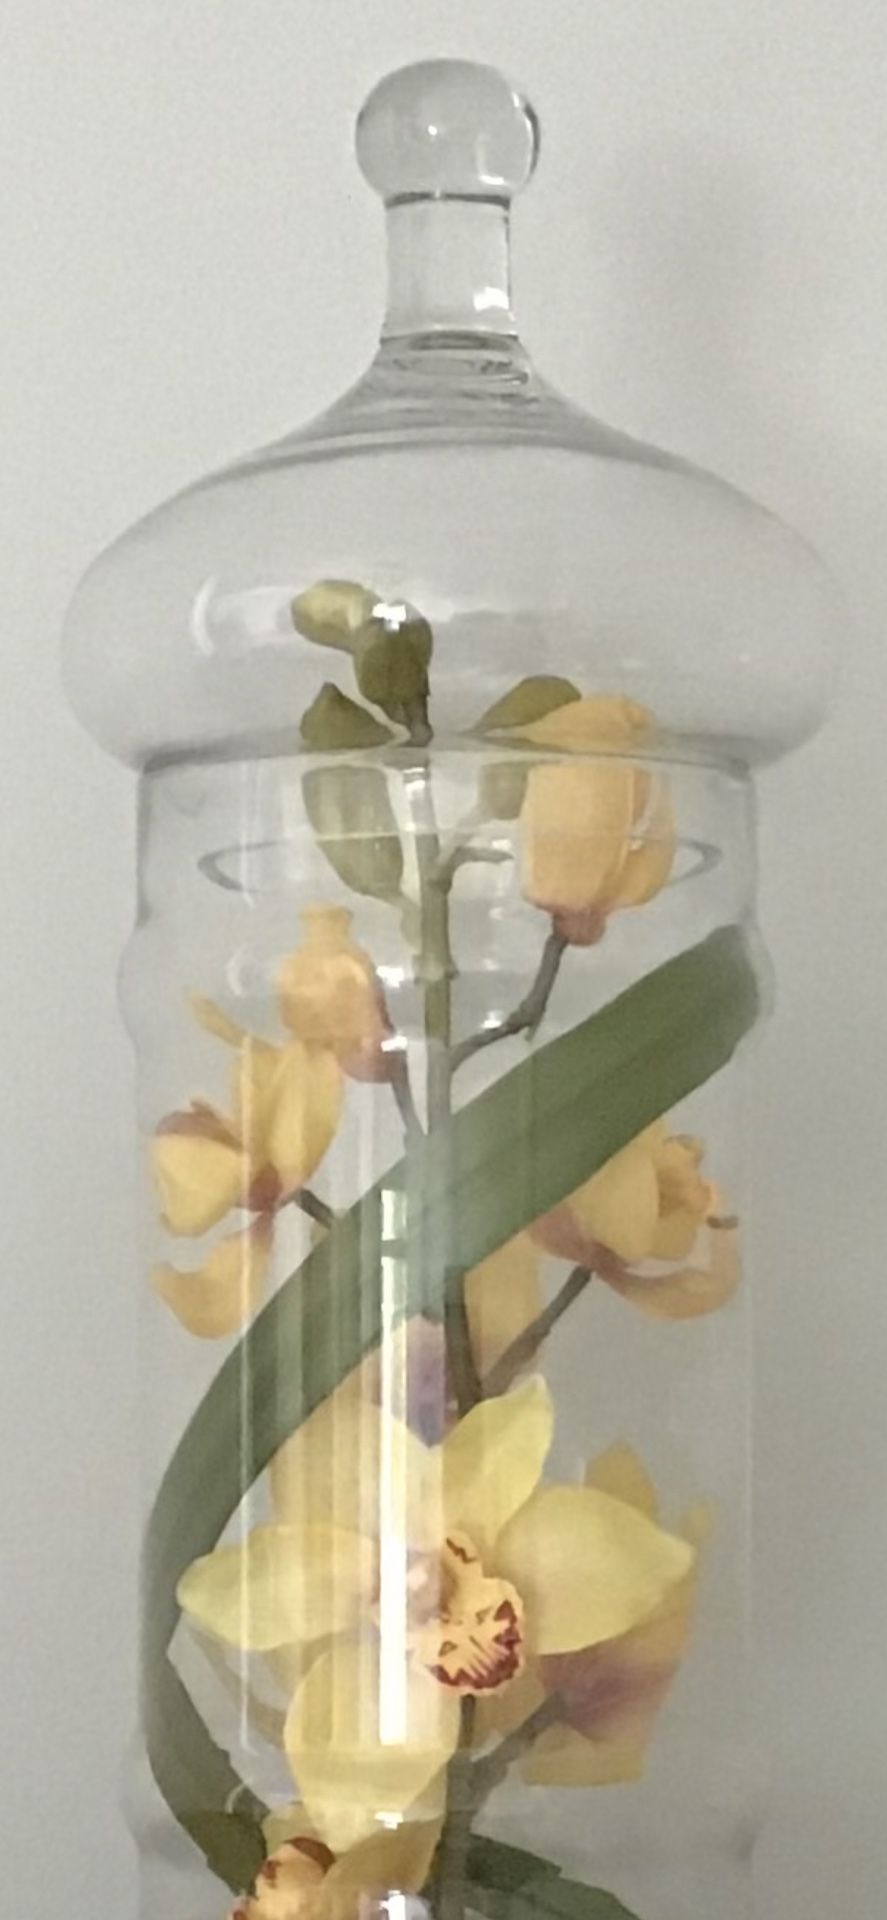 LARGE DESIGNER GLASS VASE HOME DECOR CENTERPIECE WITH YELLOW FLOWERS FLORAL ARRANGEMENT PERFECT CONDITION!